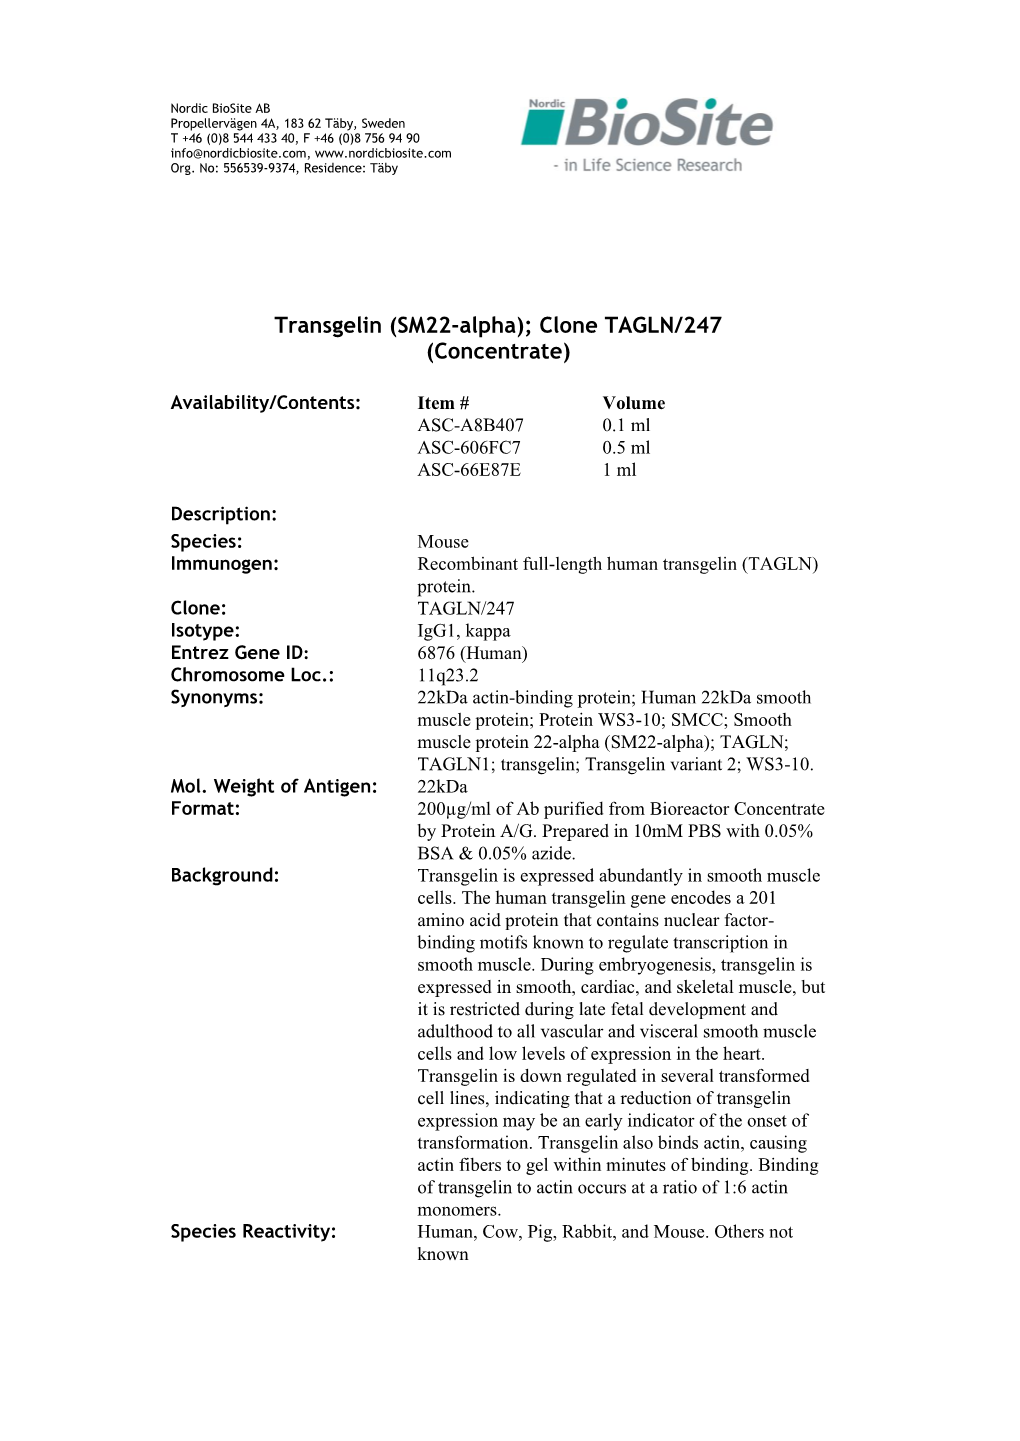 Transgelin (SM22-Alpha); Clone TAGLN/247 (Concentrate)